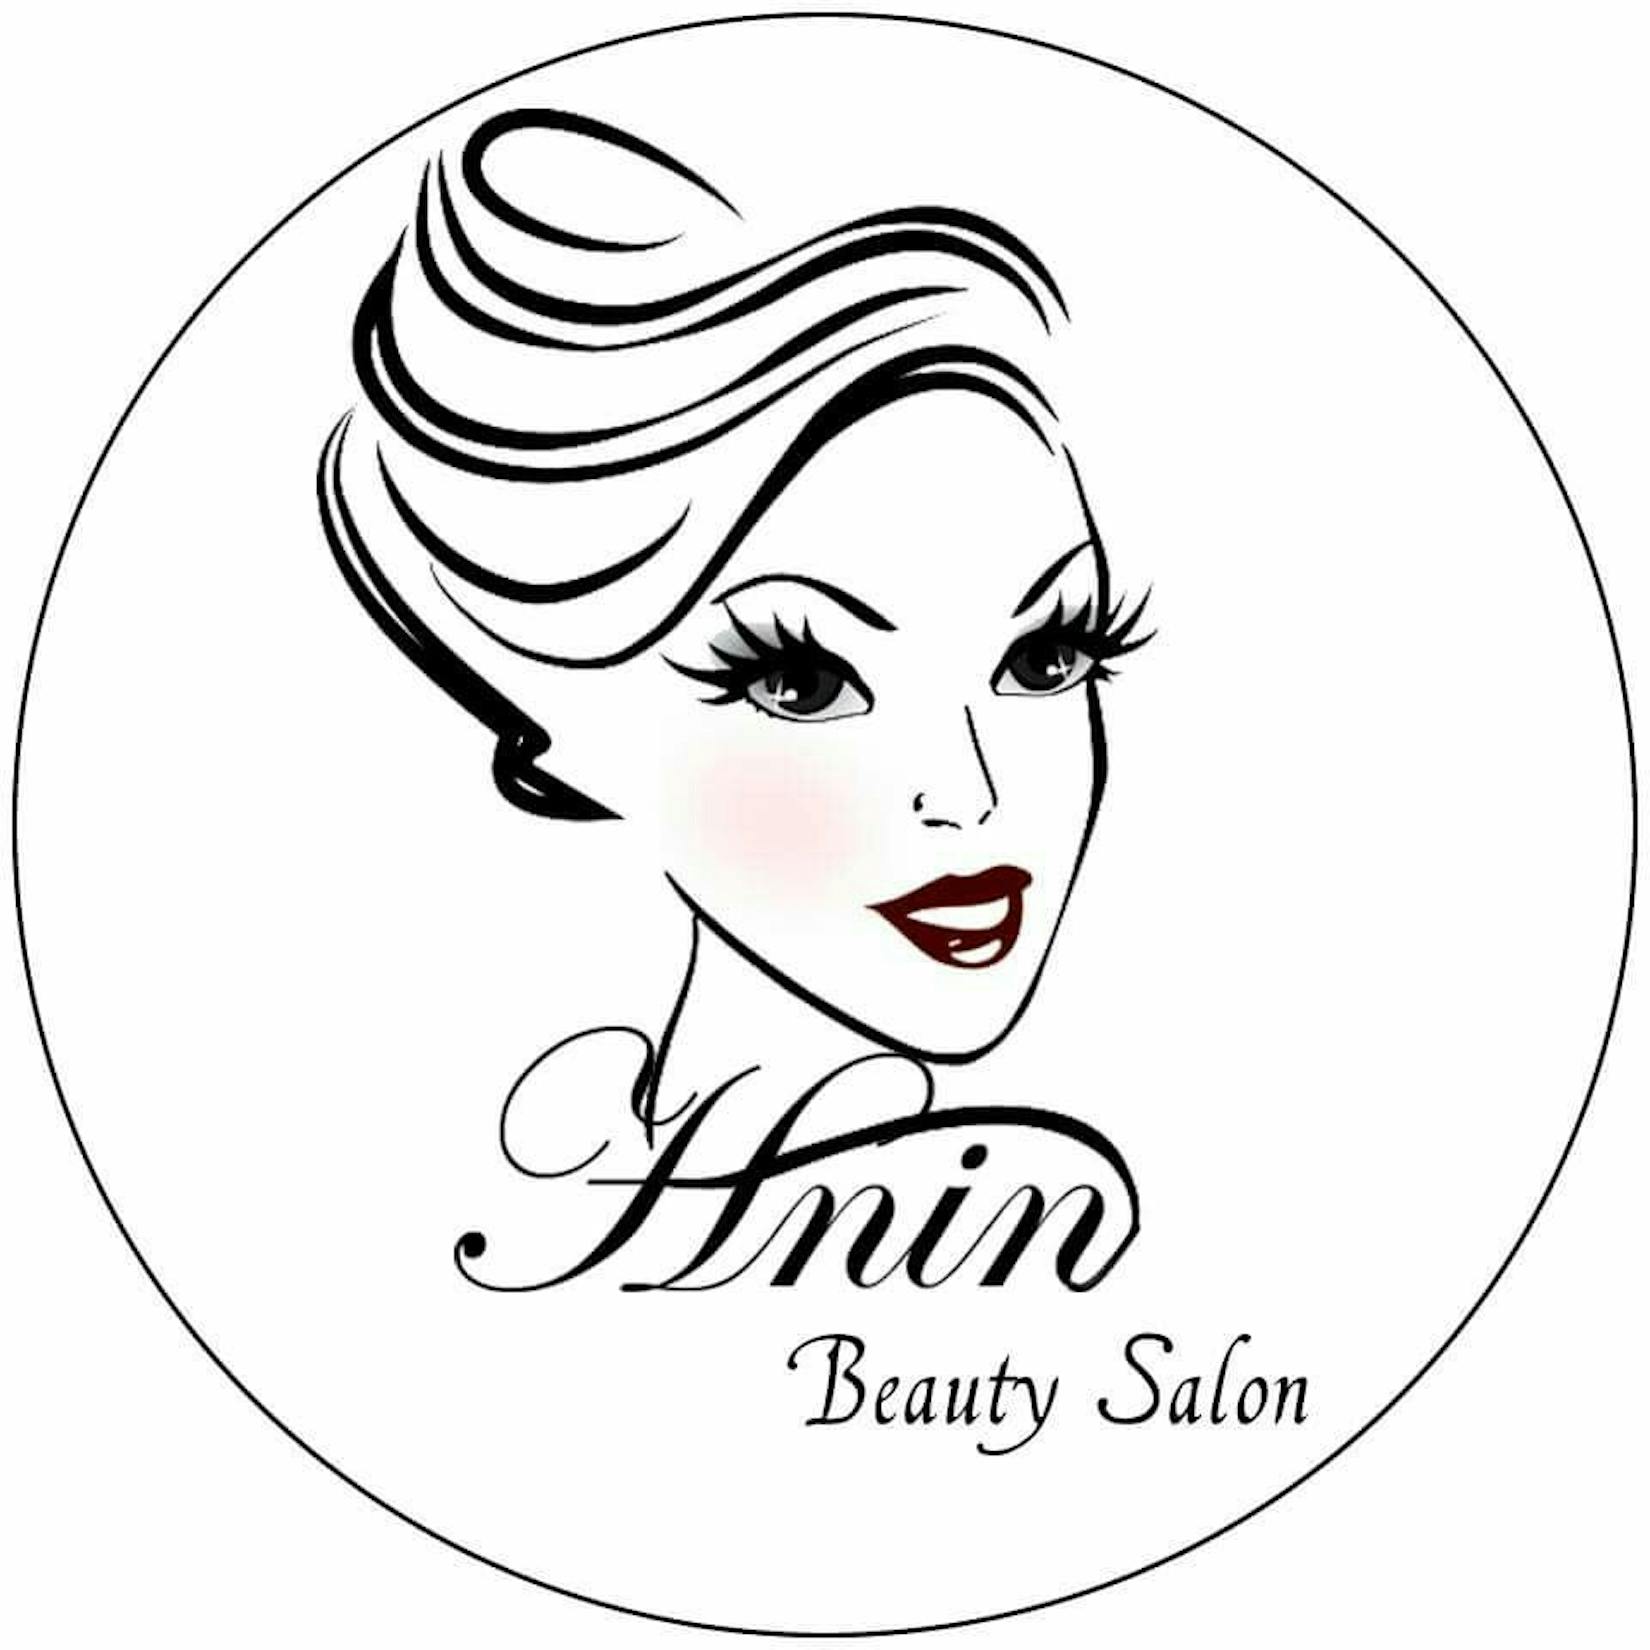 HNIN HNIN beauty salon | Beauty